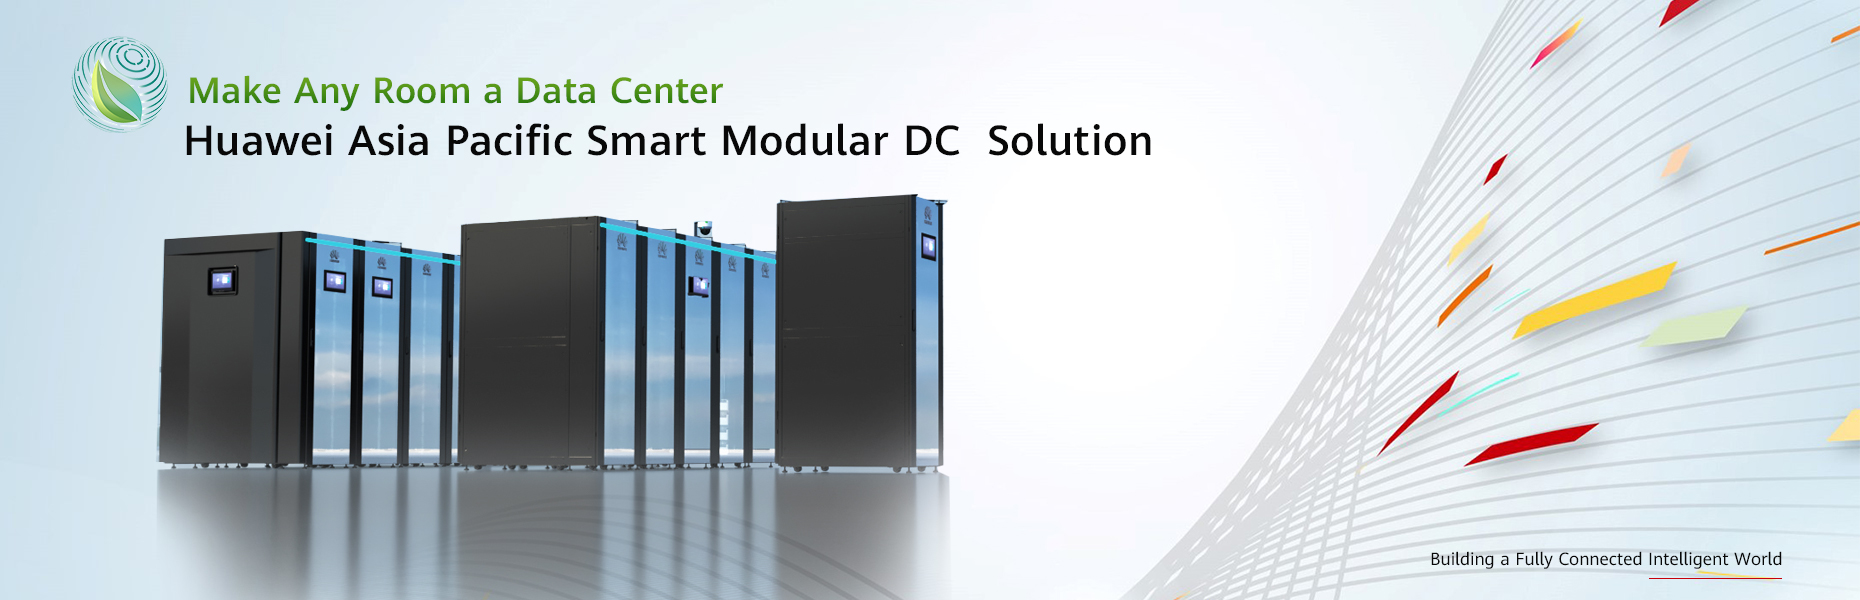 apac smart modular dc solution launch web03